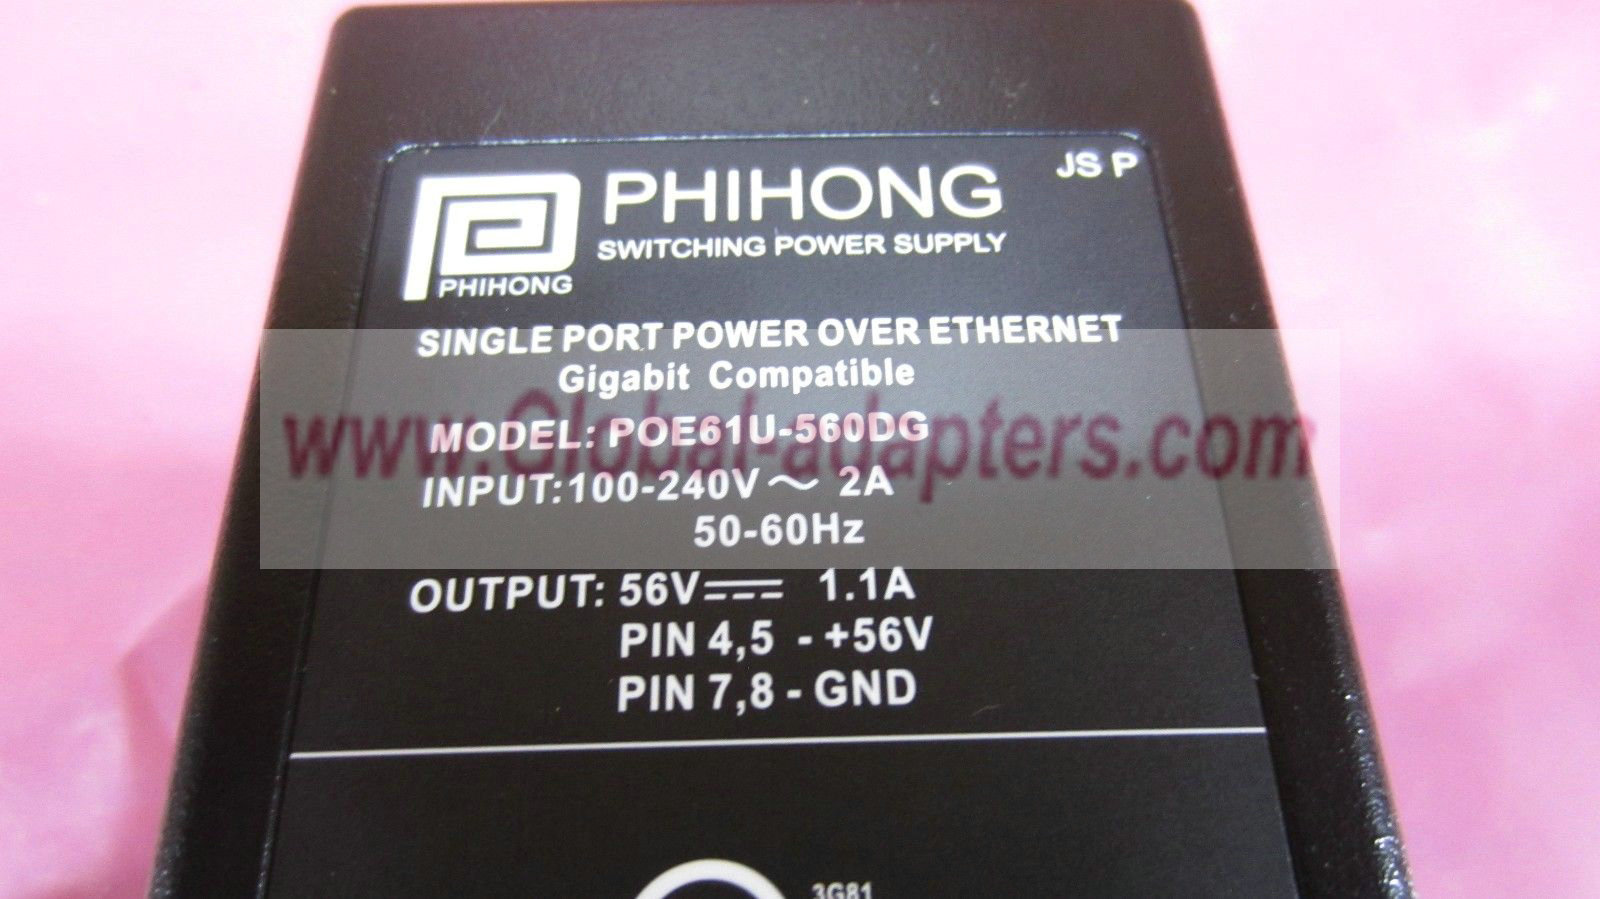 NEW 56V 1.1A Phihong POE61U-560DG Radio Universal Indoor Unit AC Power Adaptor - Click Image to Close